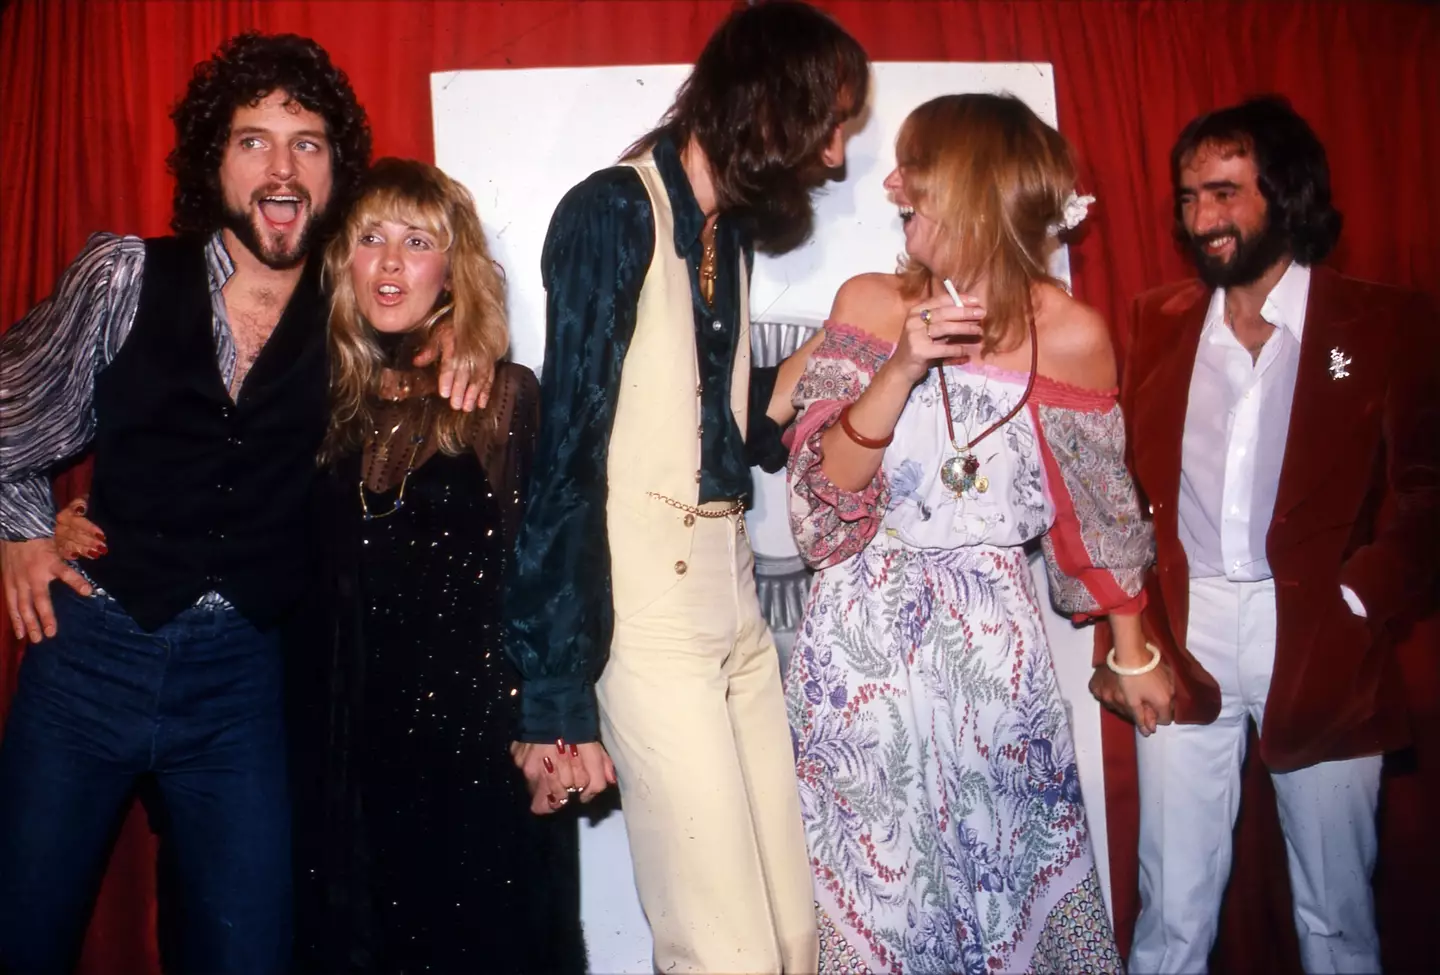 McVie joined Fleetwood Mac in 1970.